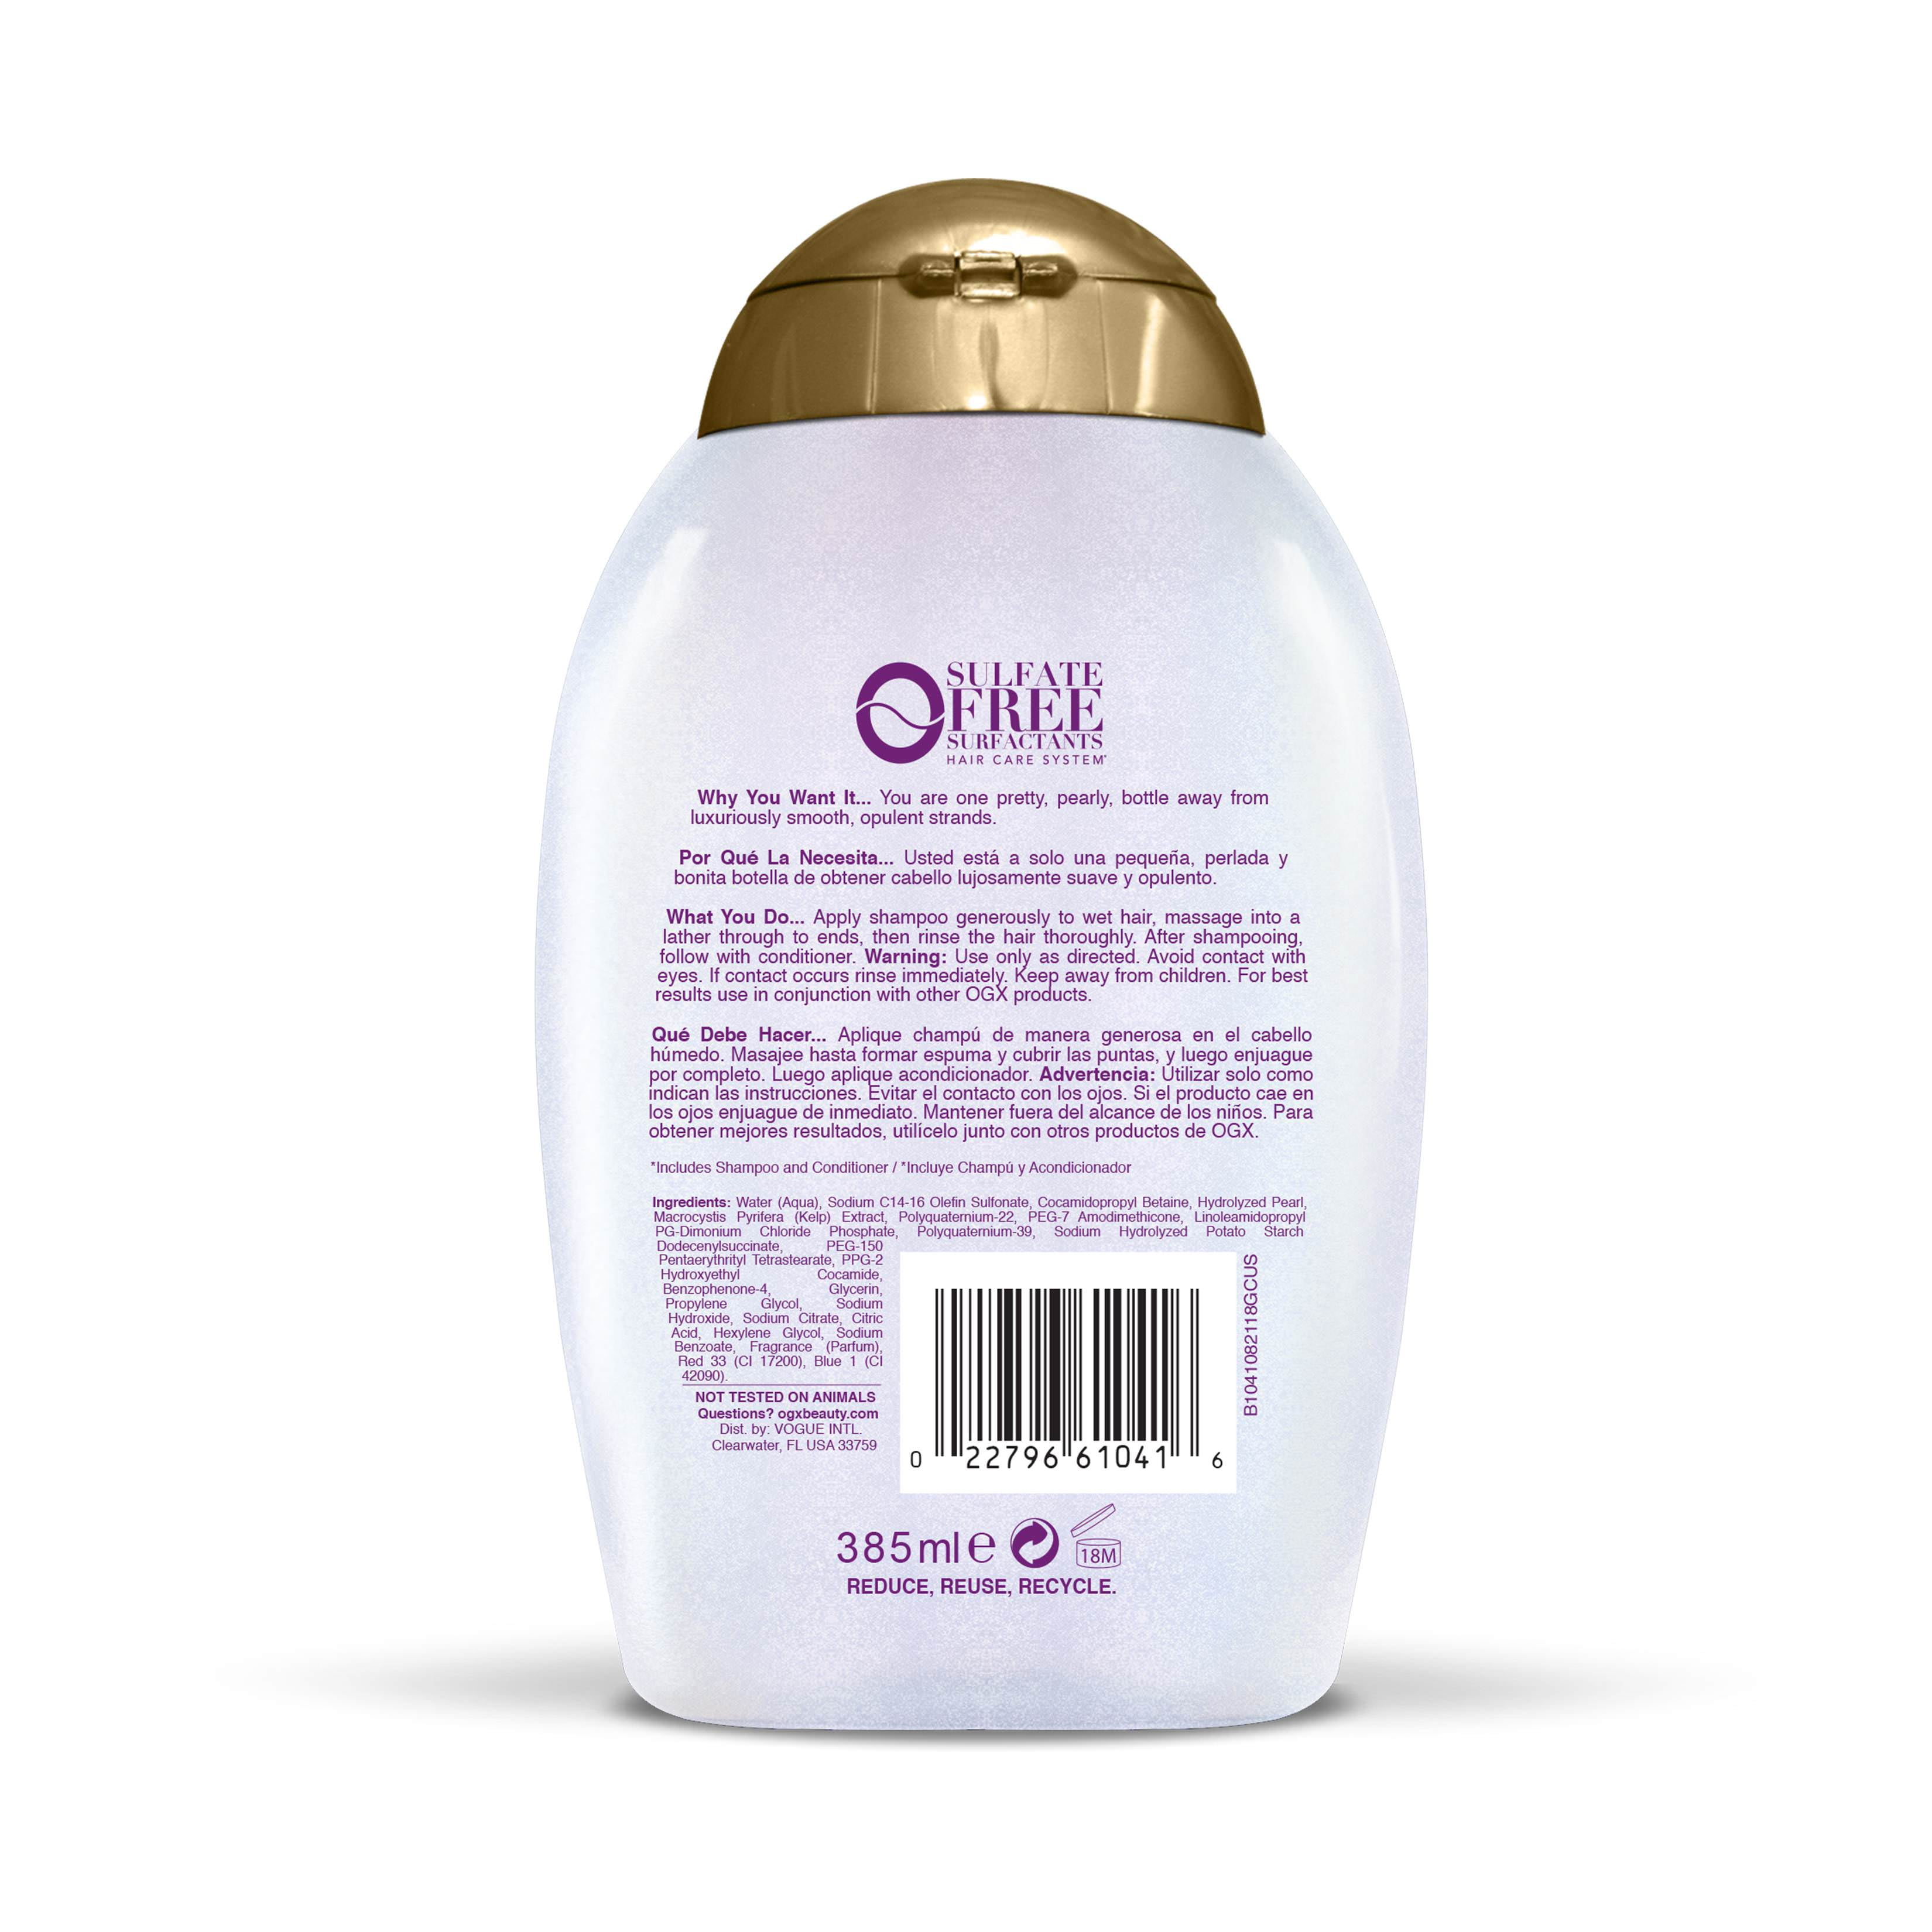 Nexxus Youth Renewal Rejuvenating Shampoo for Aging Hair Liquid Pearl 13.5  oz